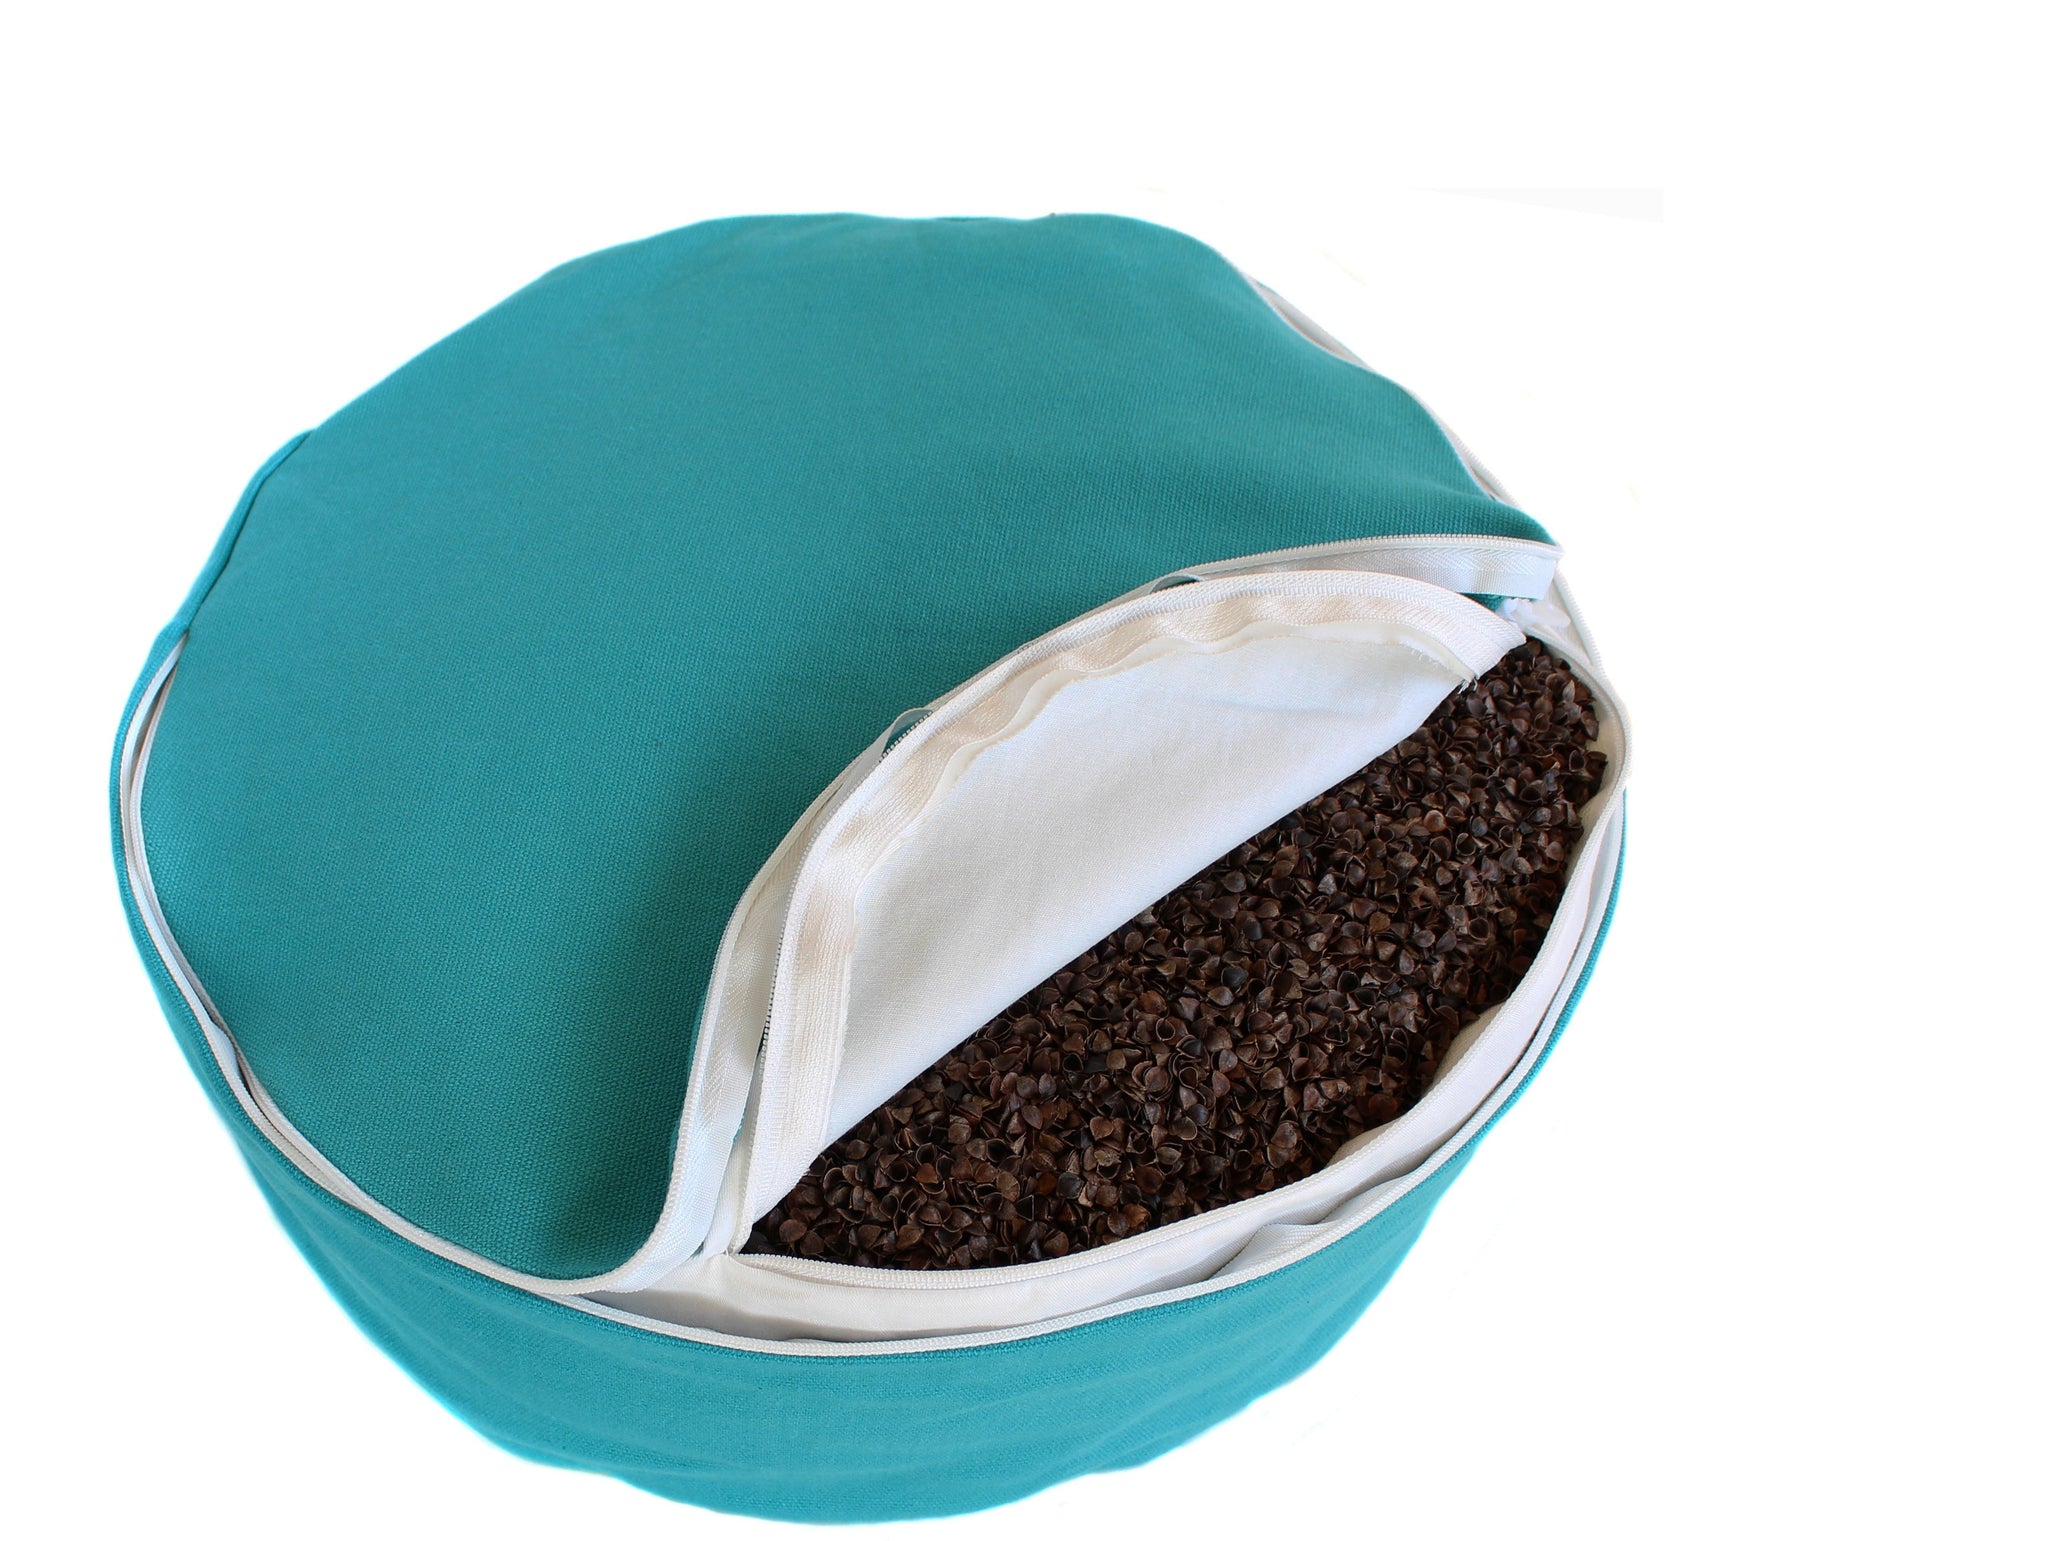 Plyopic-Zafu Meditation Cushion (Turquoise)-Meditation Cushion With Buckwheat Filling